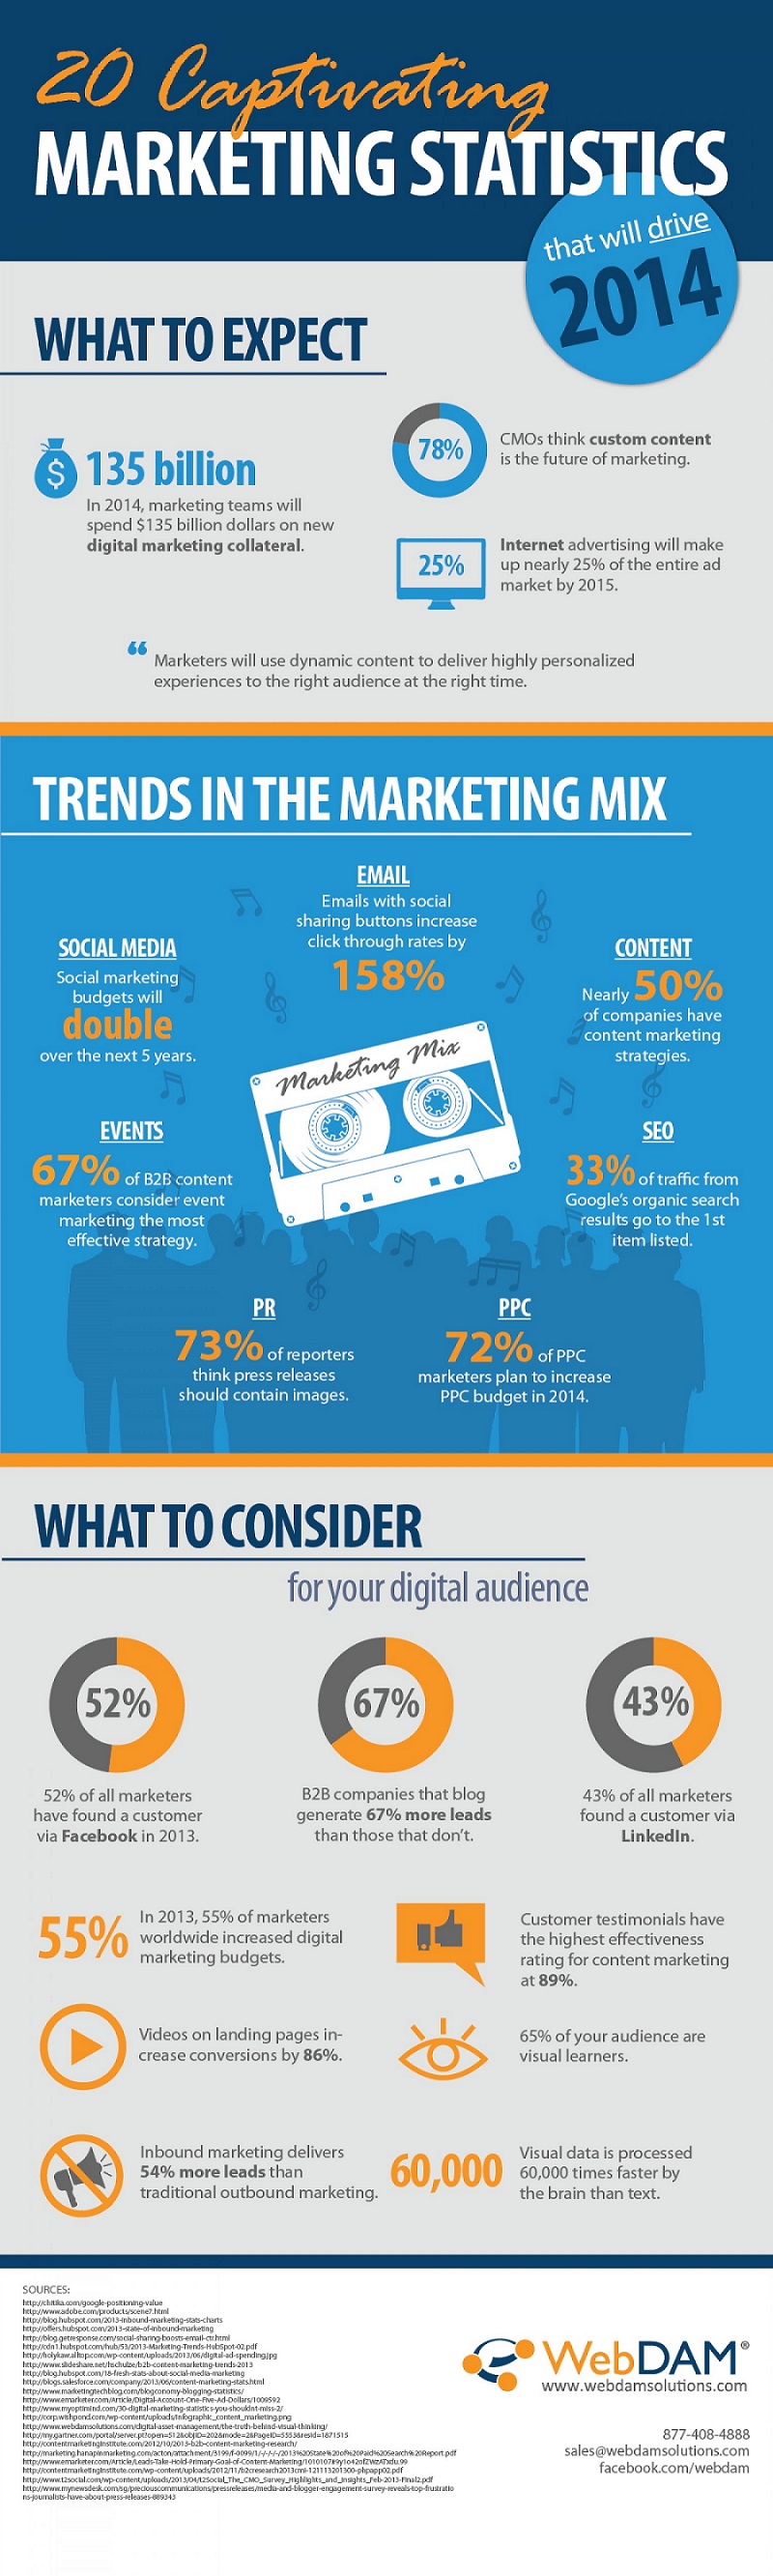 20 Digital Marketing Trends for 2014